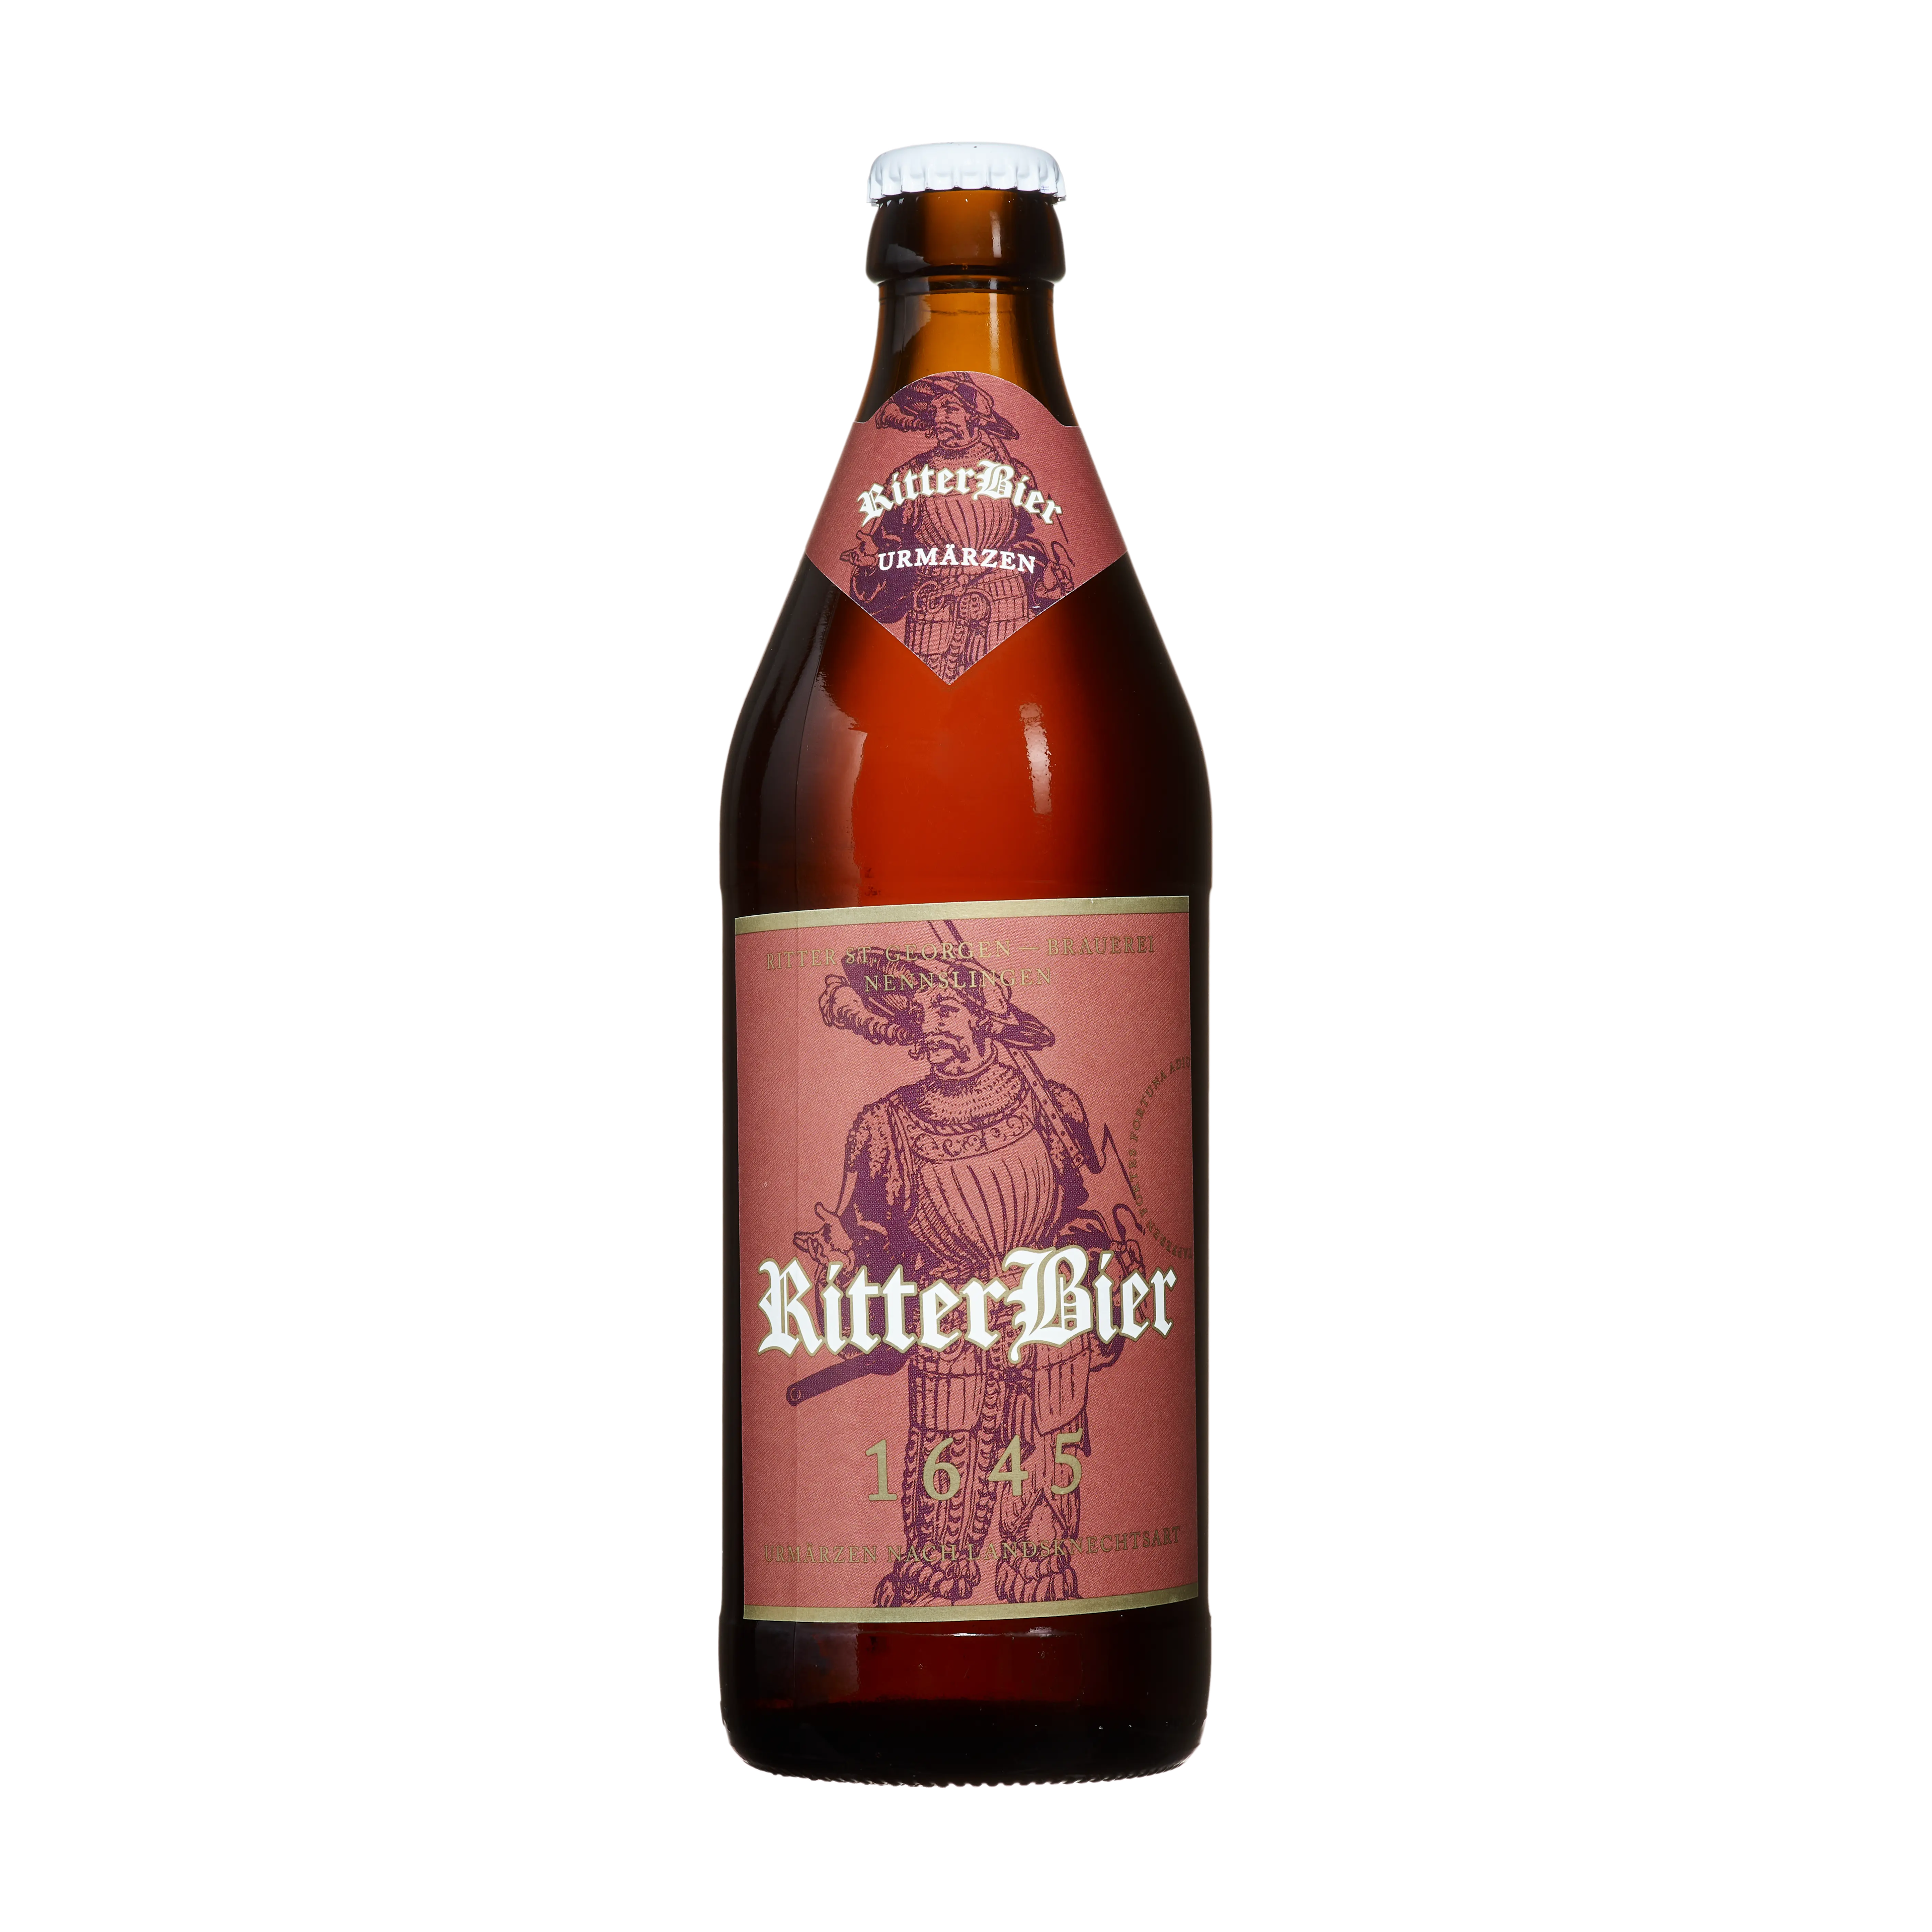 Ritter Bier Urmärzen 1645